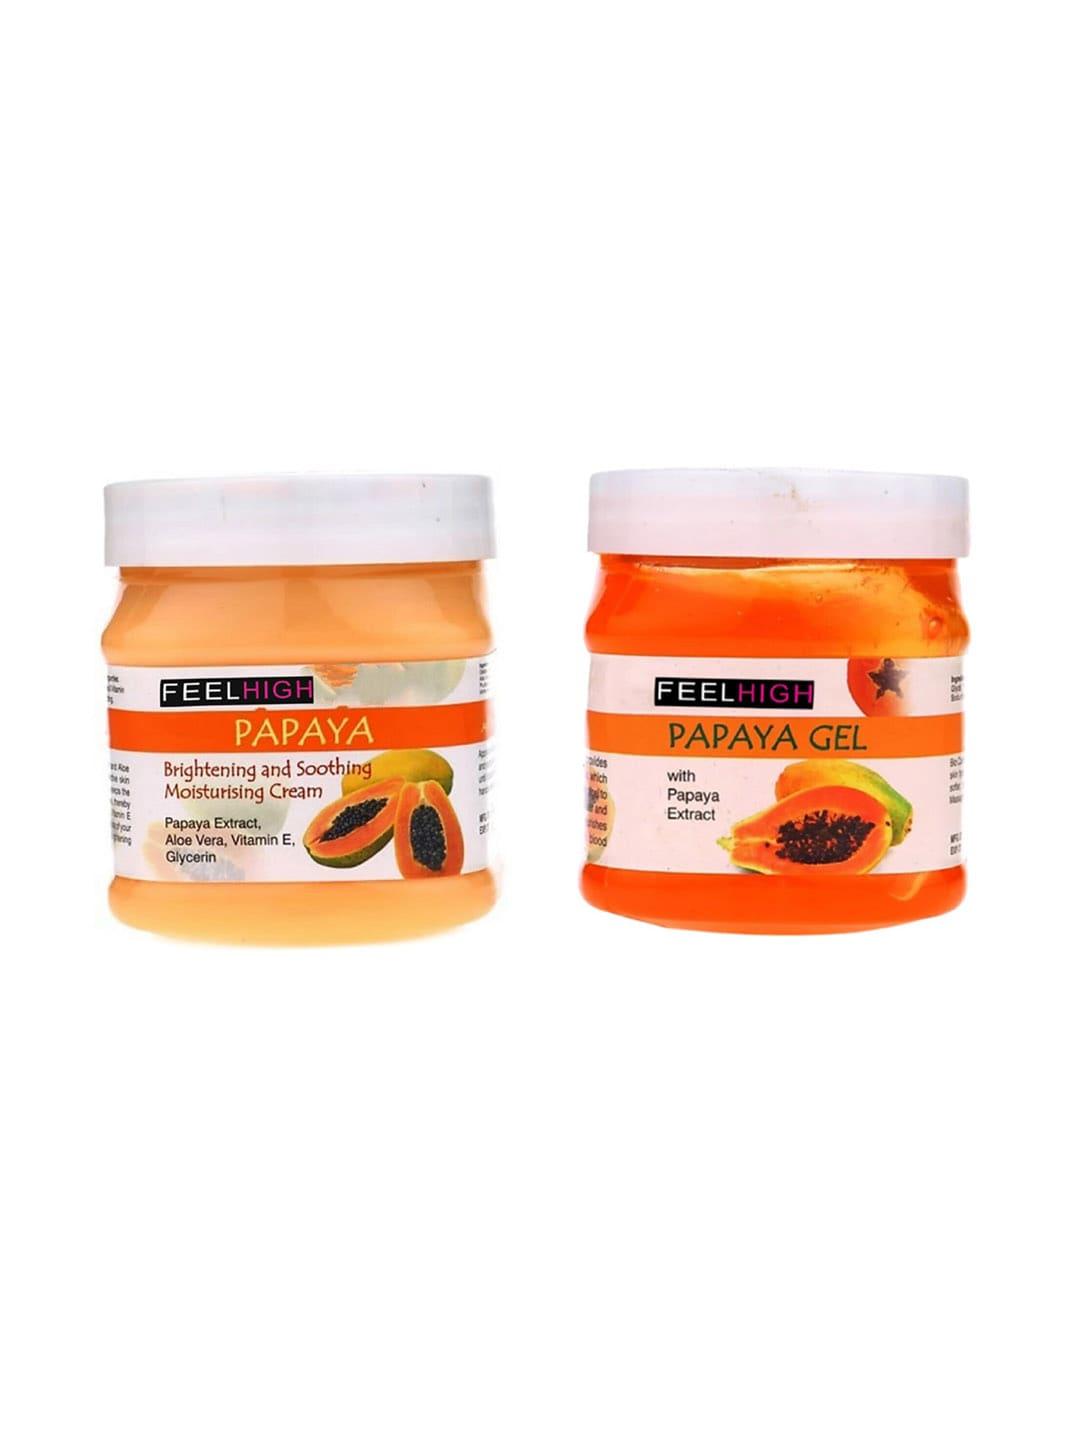 feelhigh set of 2 papaya facial kit-500 ml each